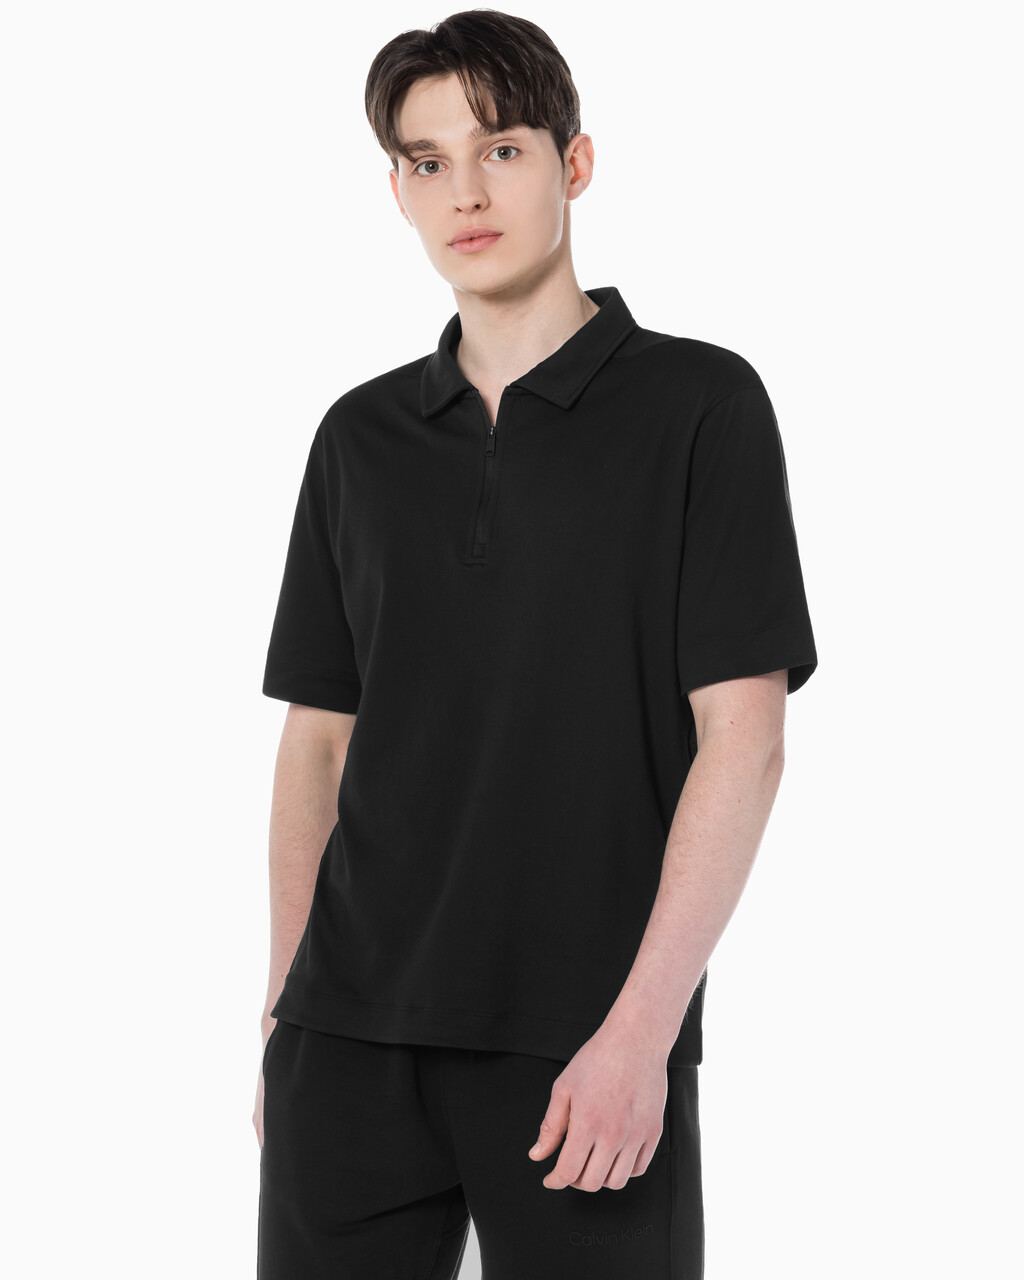 Buy 남성 리플렉티브 로고 레귤러 핏 기능성 집업 폴로 티셔츠 in color BLACK